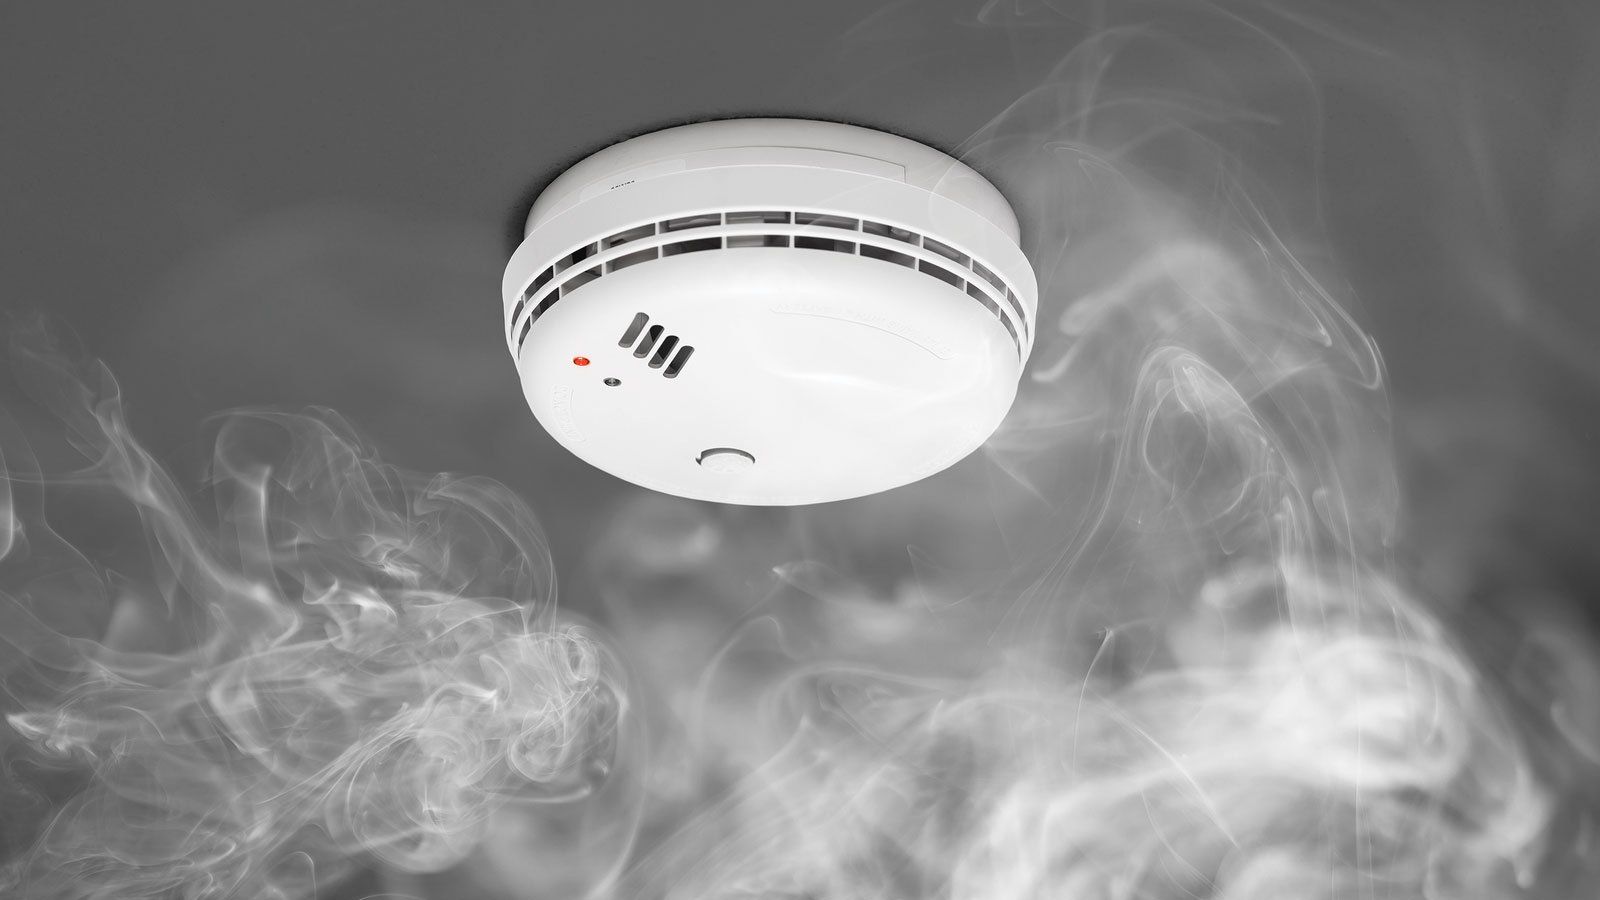 Smoke detector insurance discount image